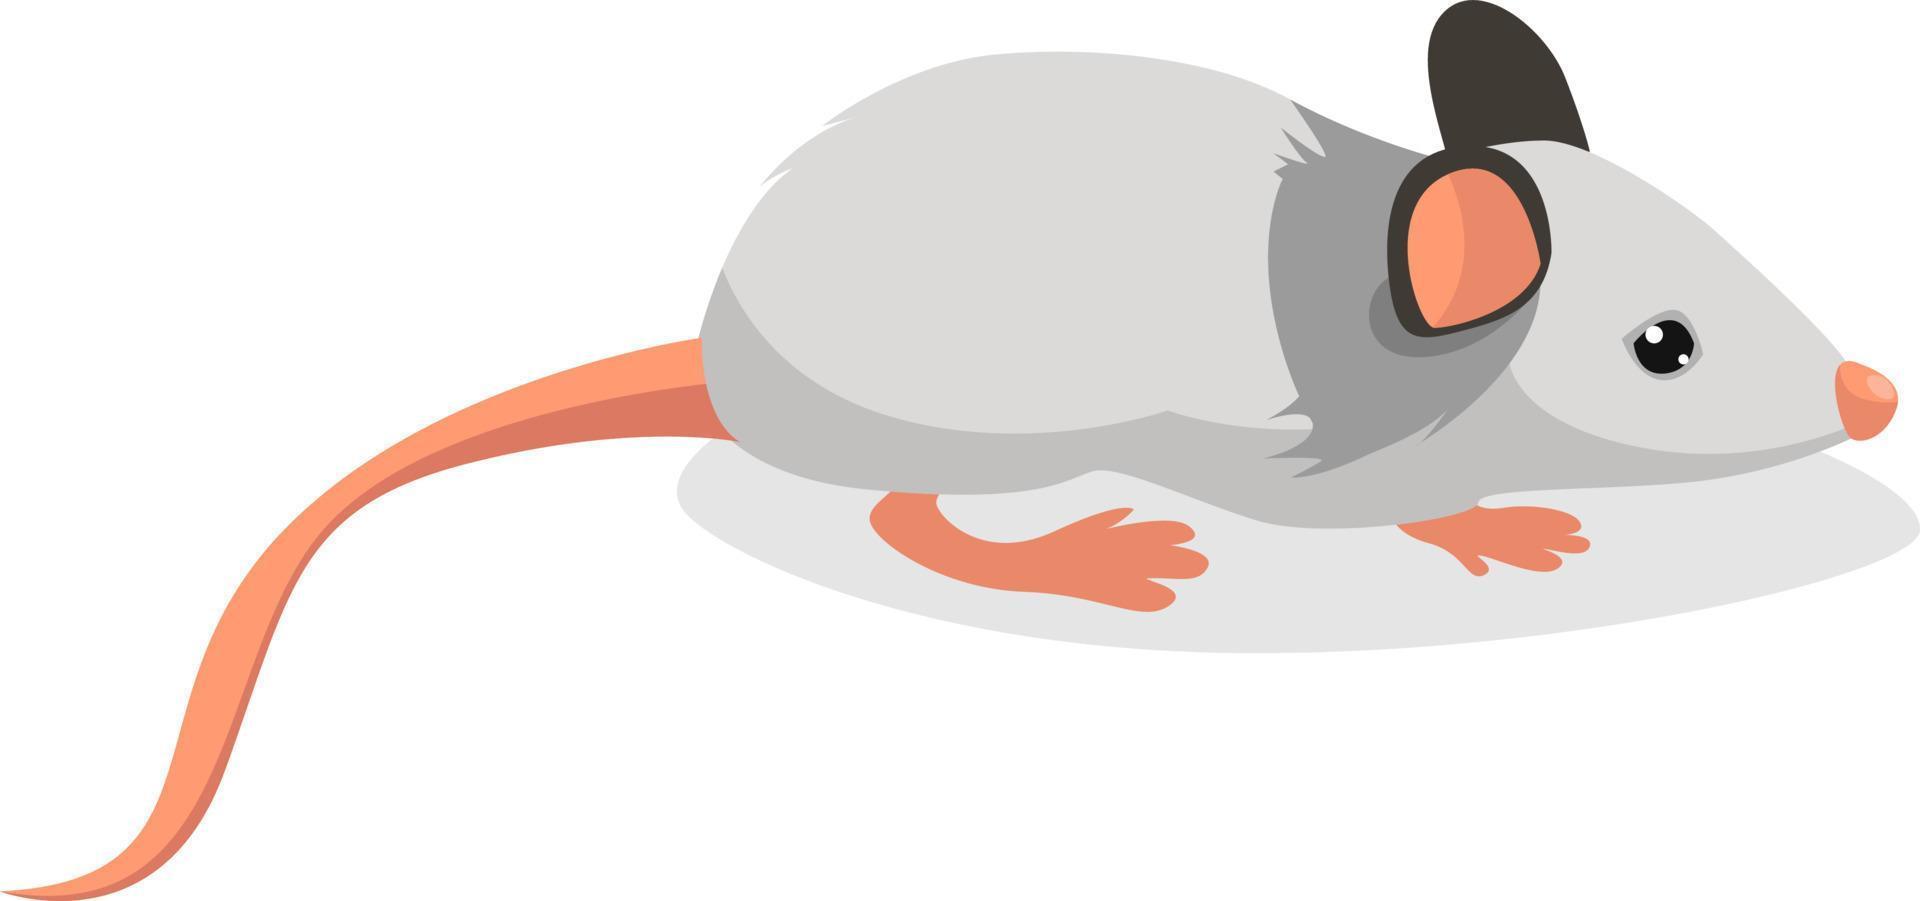 White mouse, illustration, vector on white background